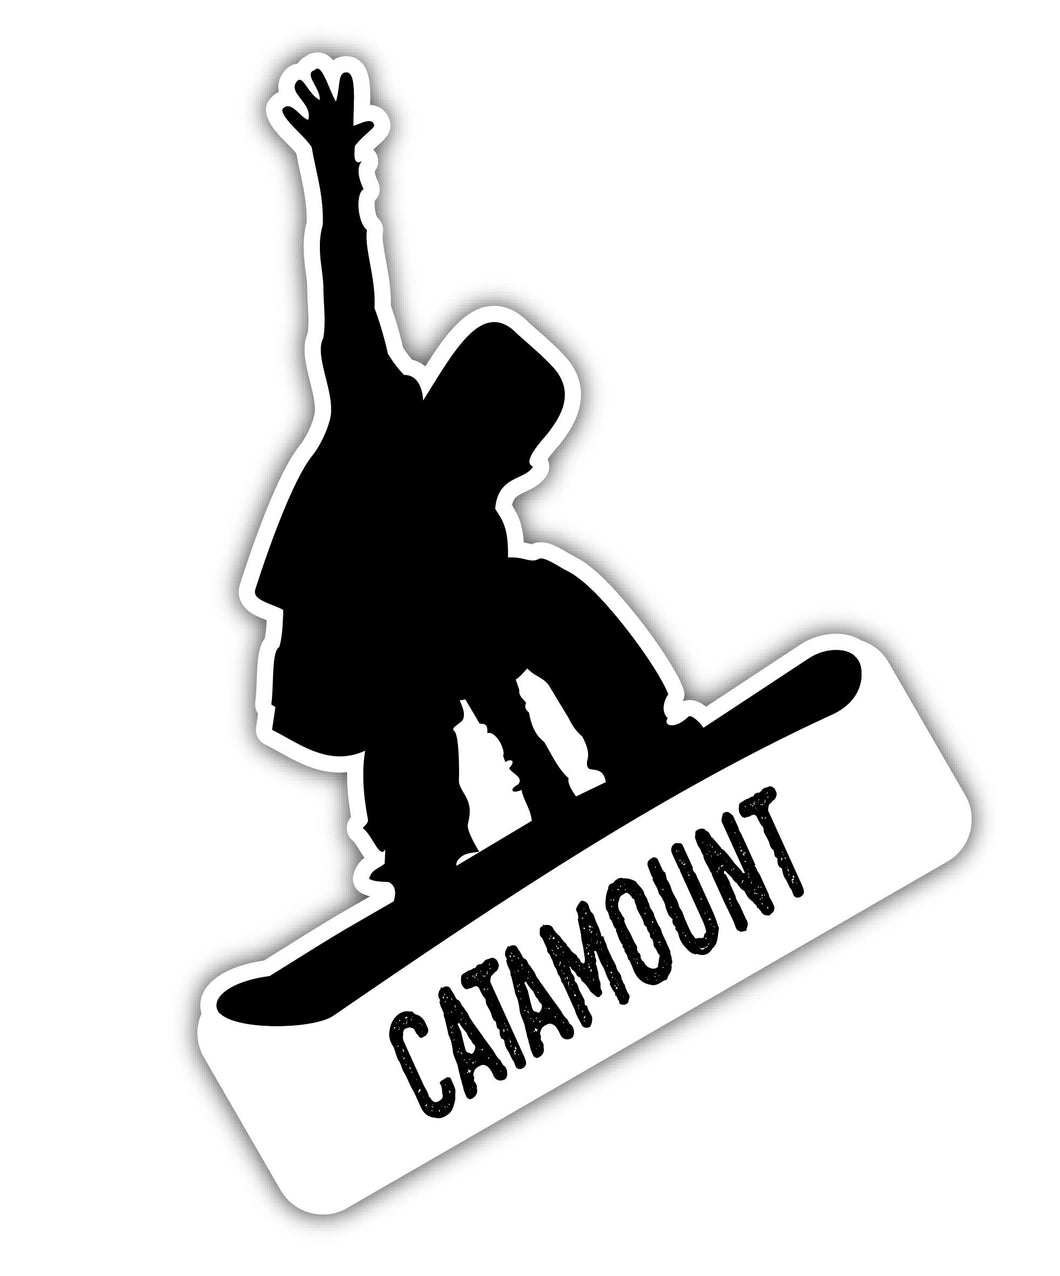 Catamount New York Ski Adventures Souvenir 4 Inch Vinyl Decal Sticker Board Design